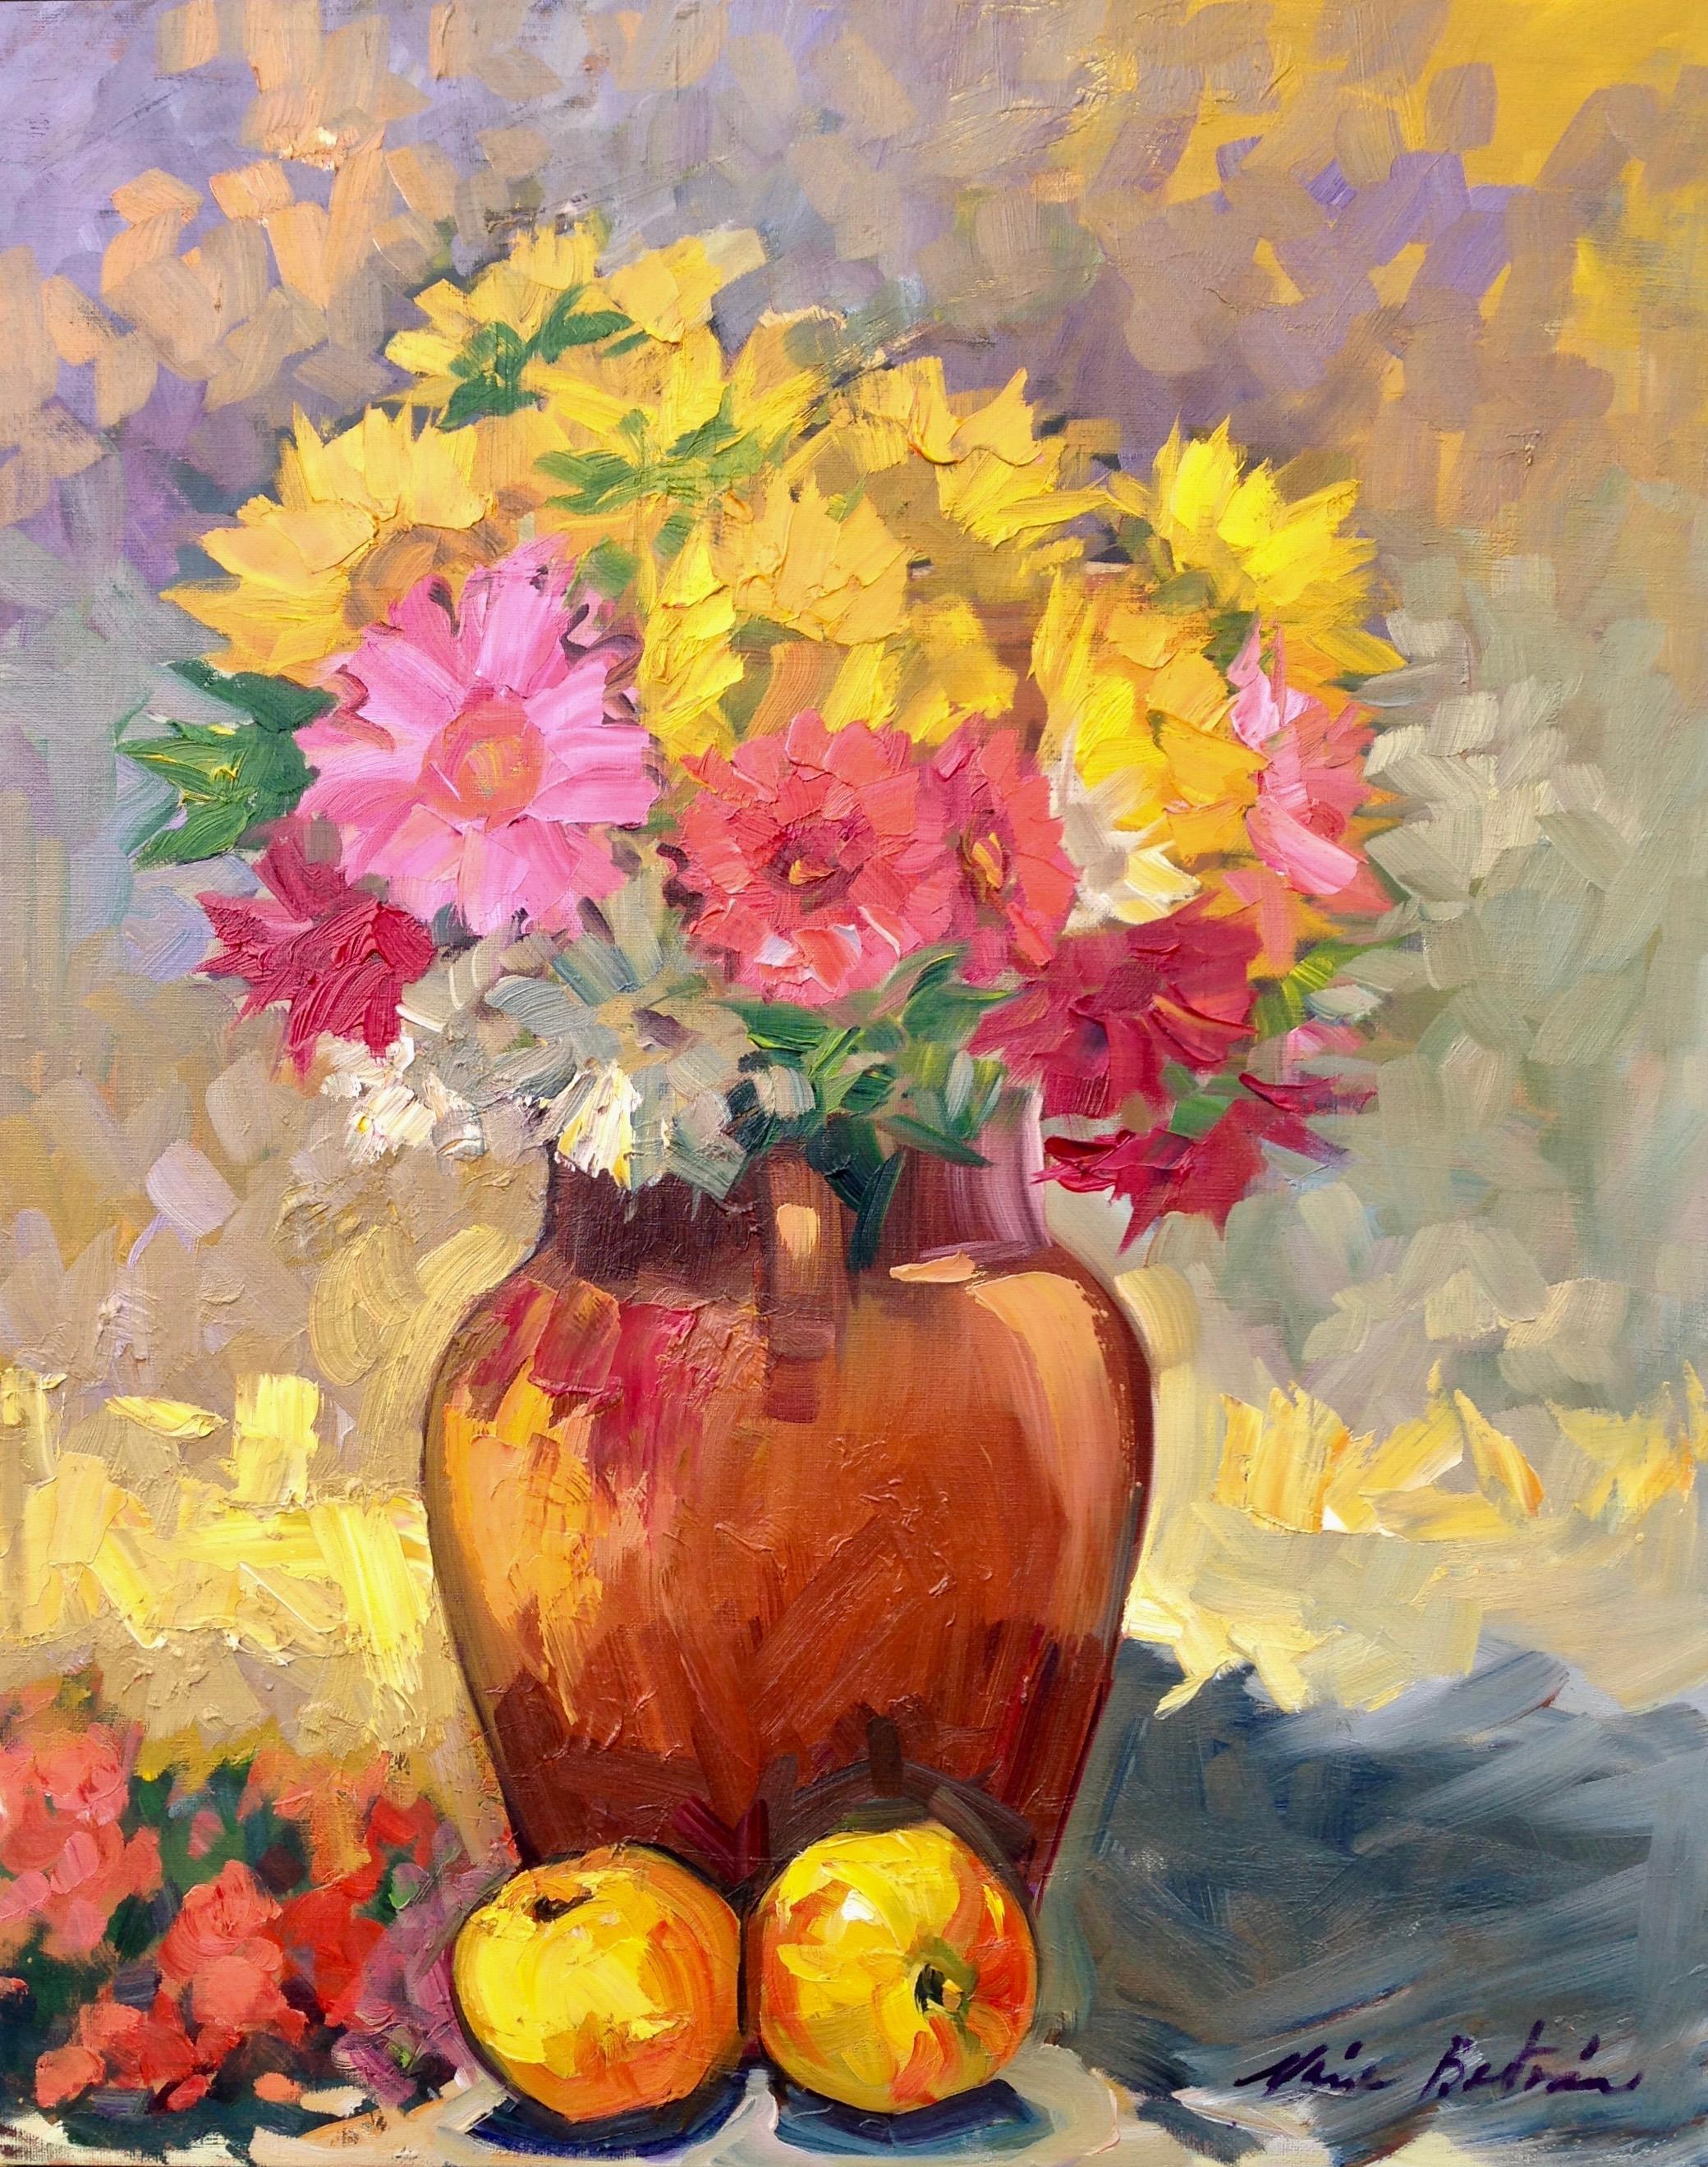 Maria Bertrán Still-Life Painting - "Spring Mixed Floral" Contemporary Impressionist Still Life Oil